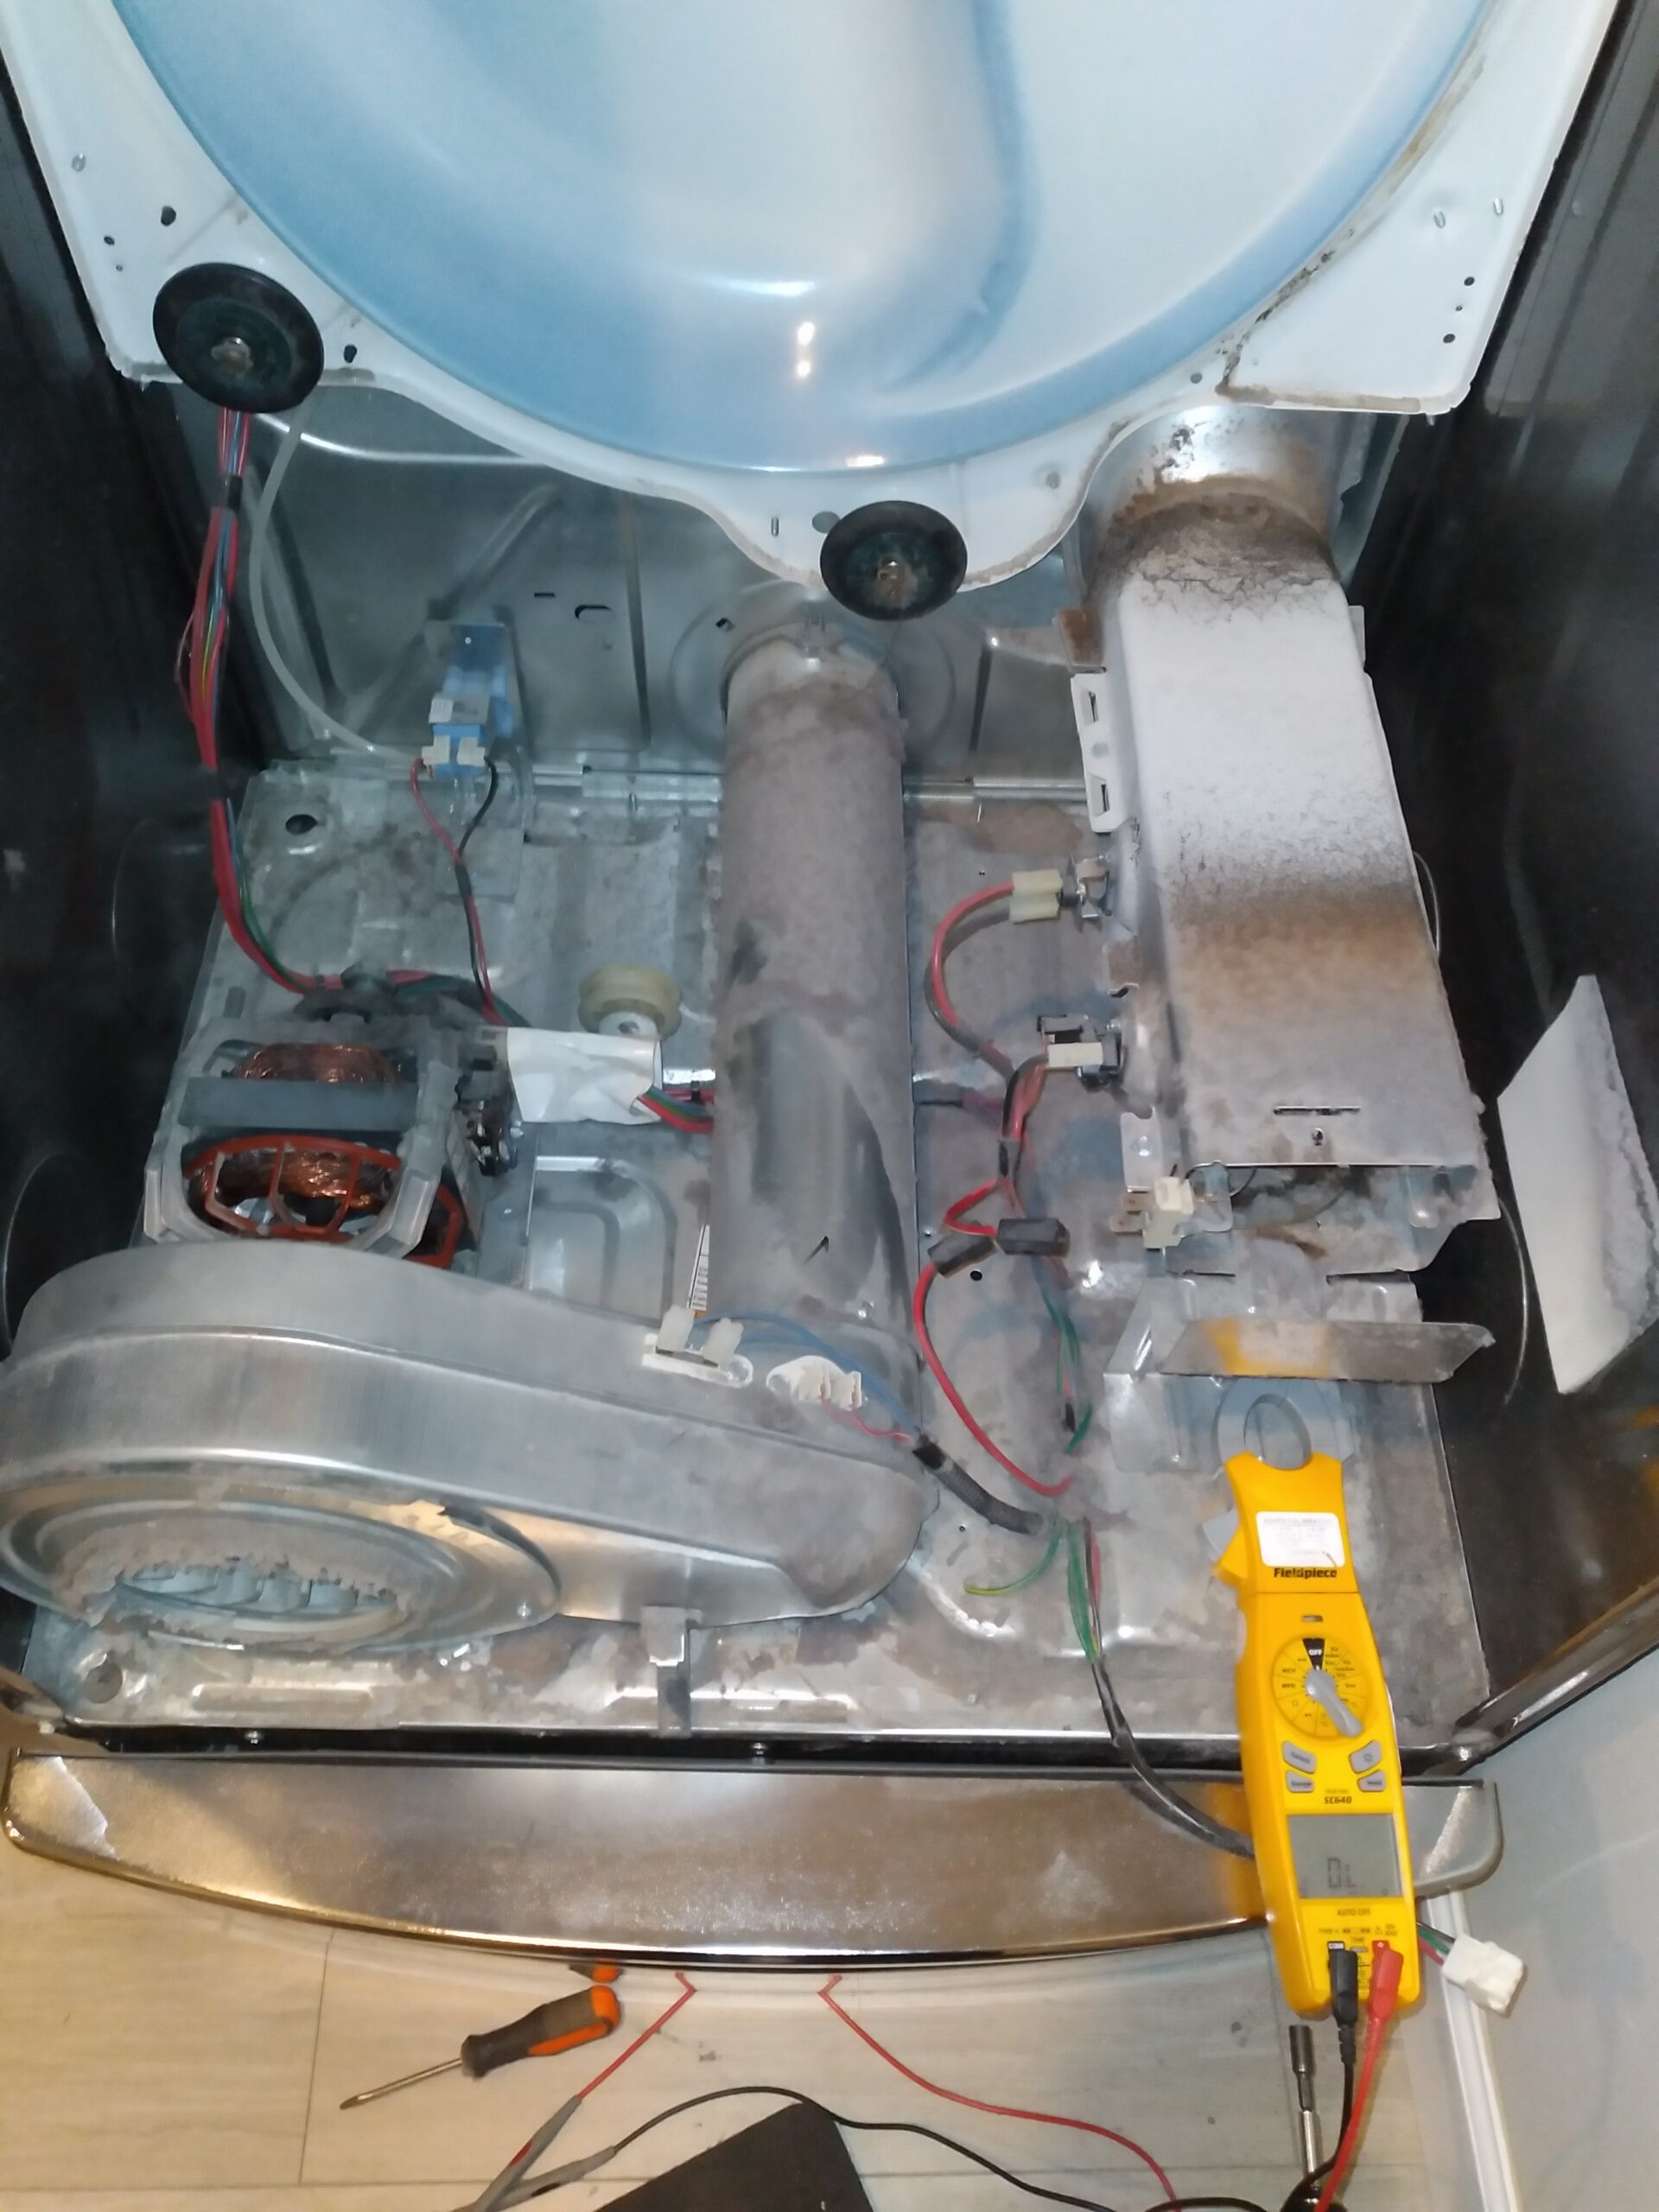 appliance repair dryer repair not heating properly bellview pines place bellview fl 32526